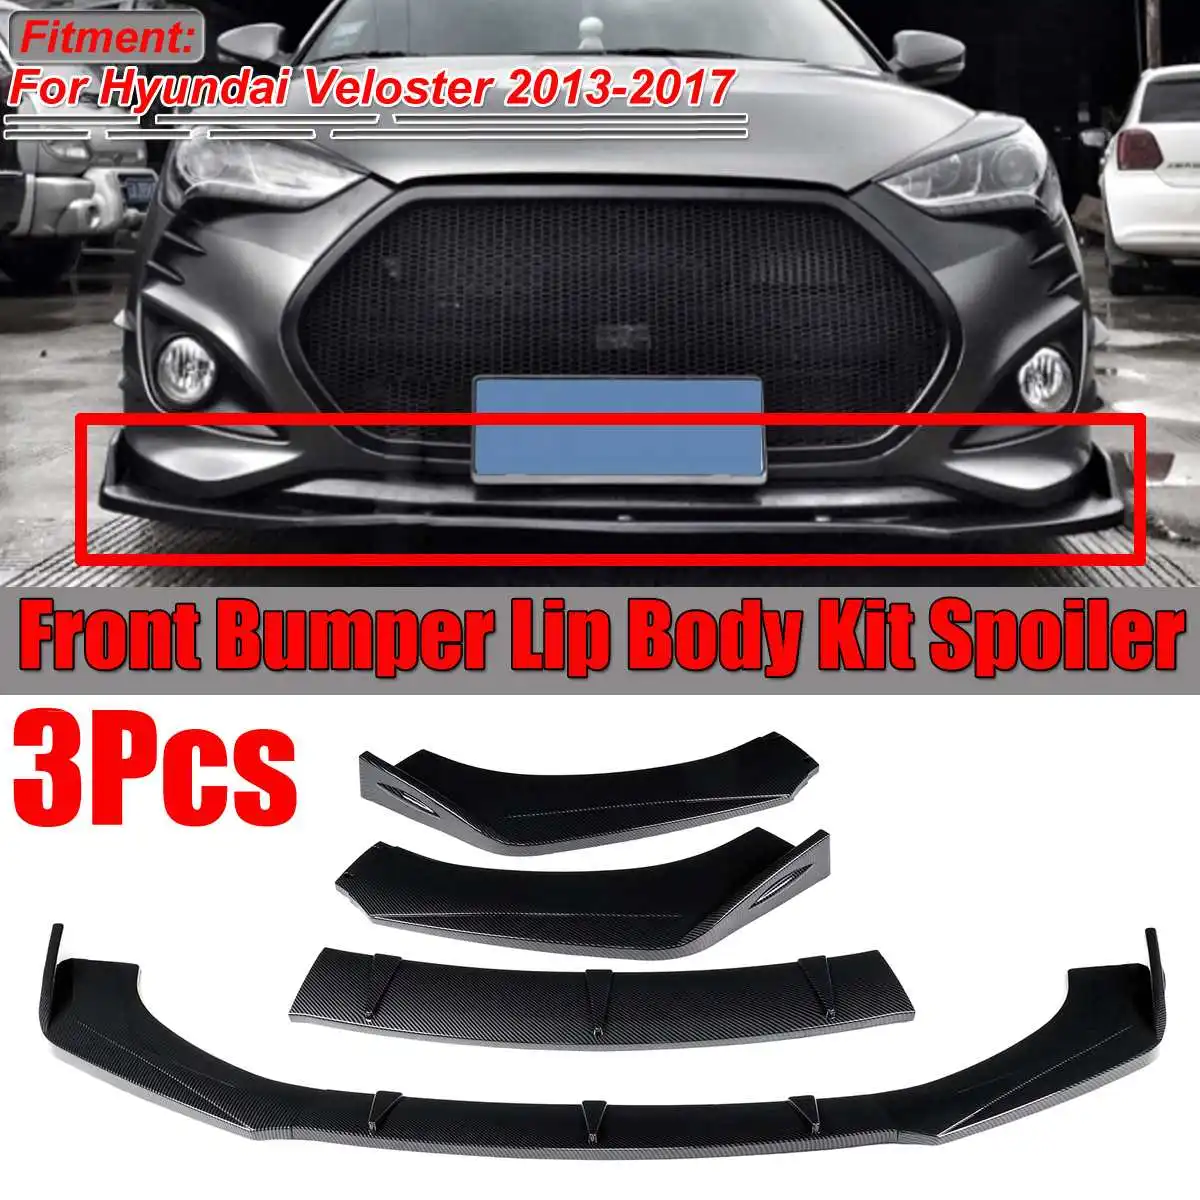 

3Pcs Car Front Bumper Splitter Lip Body Kit Spoiler Diffuser Deflector Protector Guard For Hyundai For Veloster 2013-2017